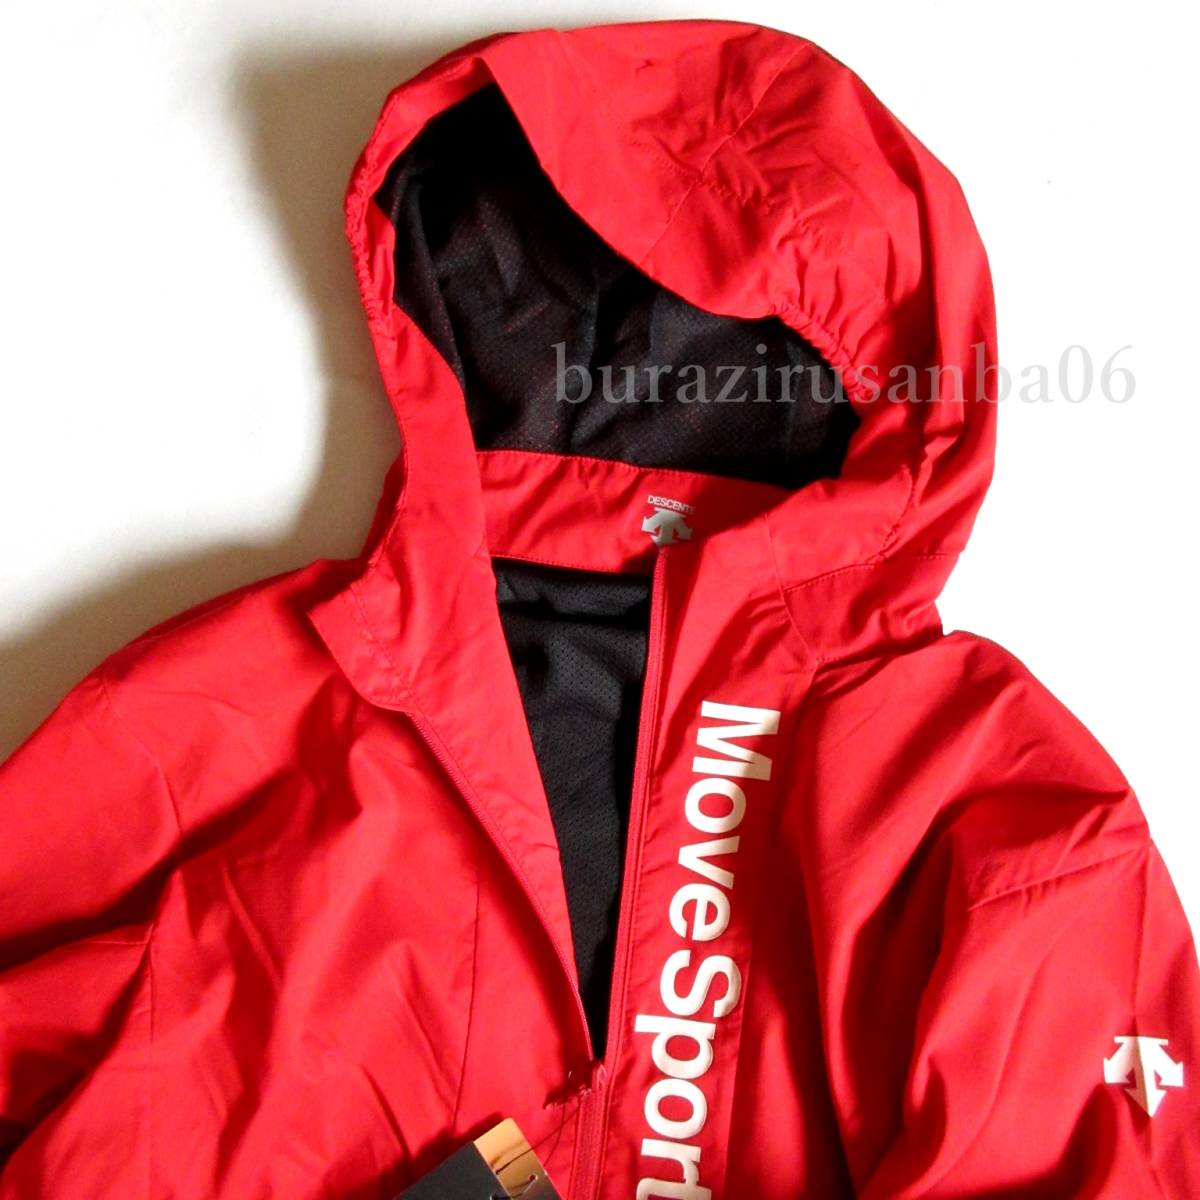  men's M* unused regular price 23,870 jpy DESCENTE Descente air sa motion cotton inside combined use lining Wind breaker jacket pants setup 